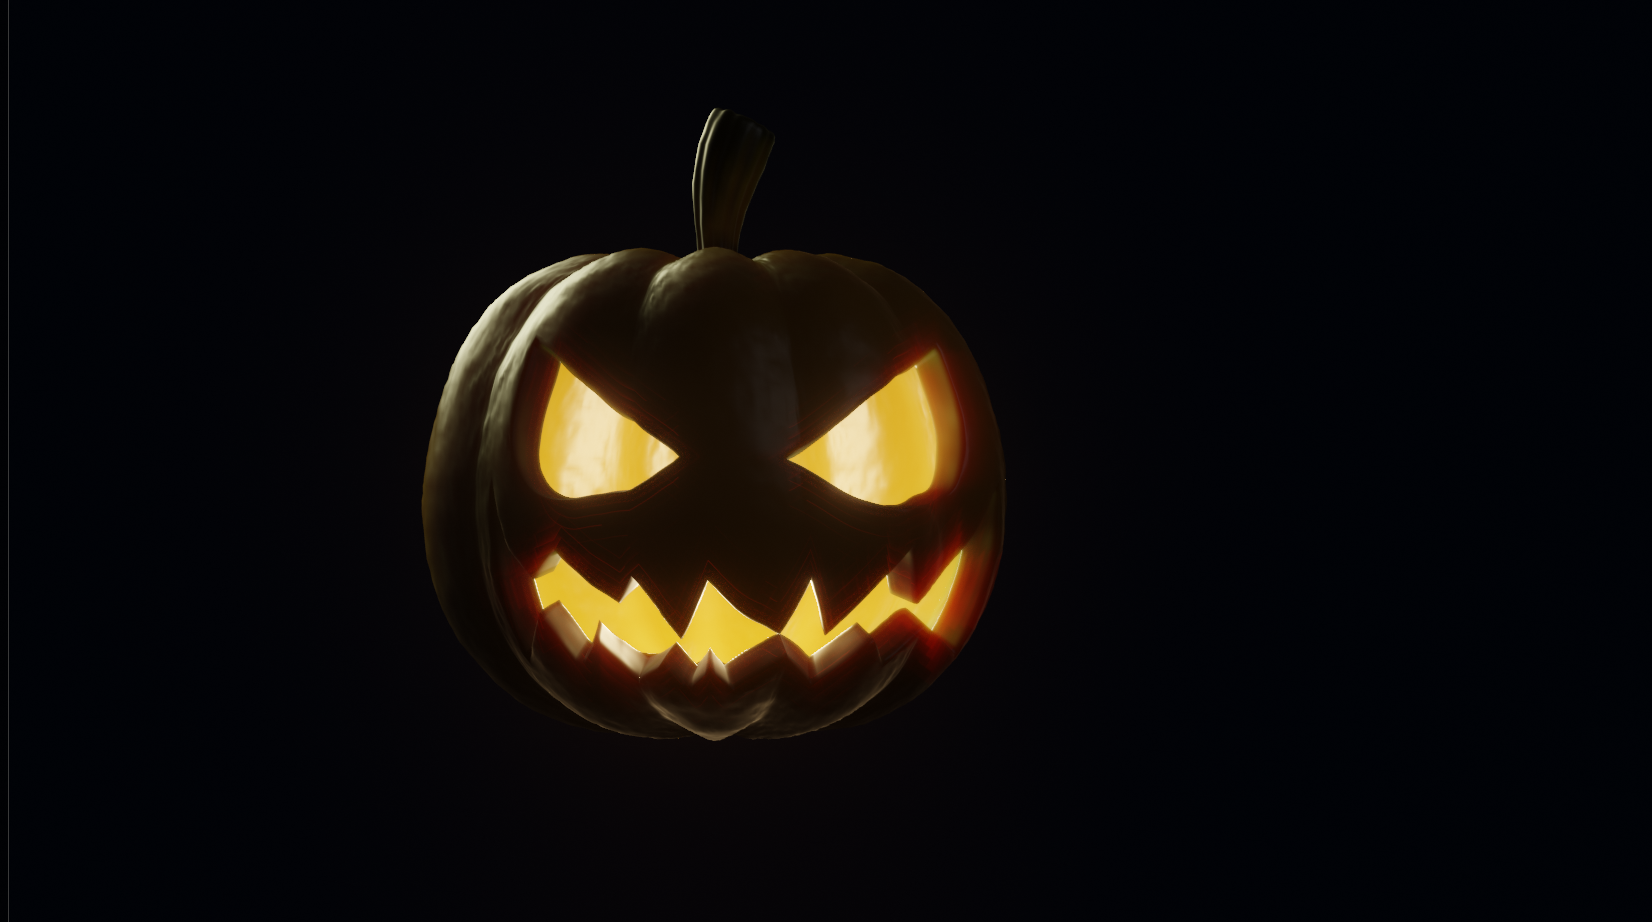 Halloween Jack O Lantern preview image 1